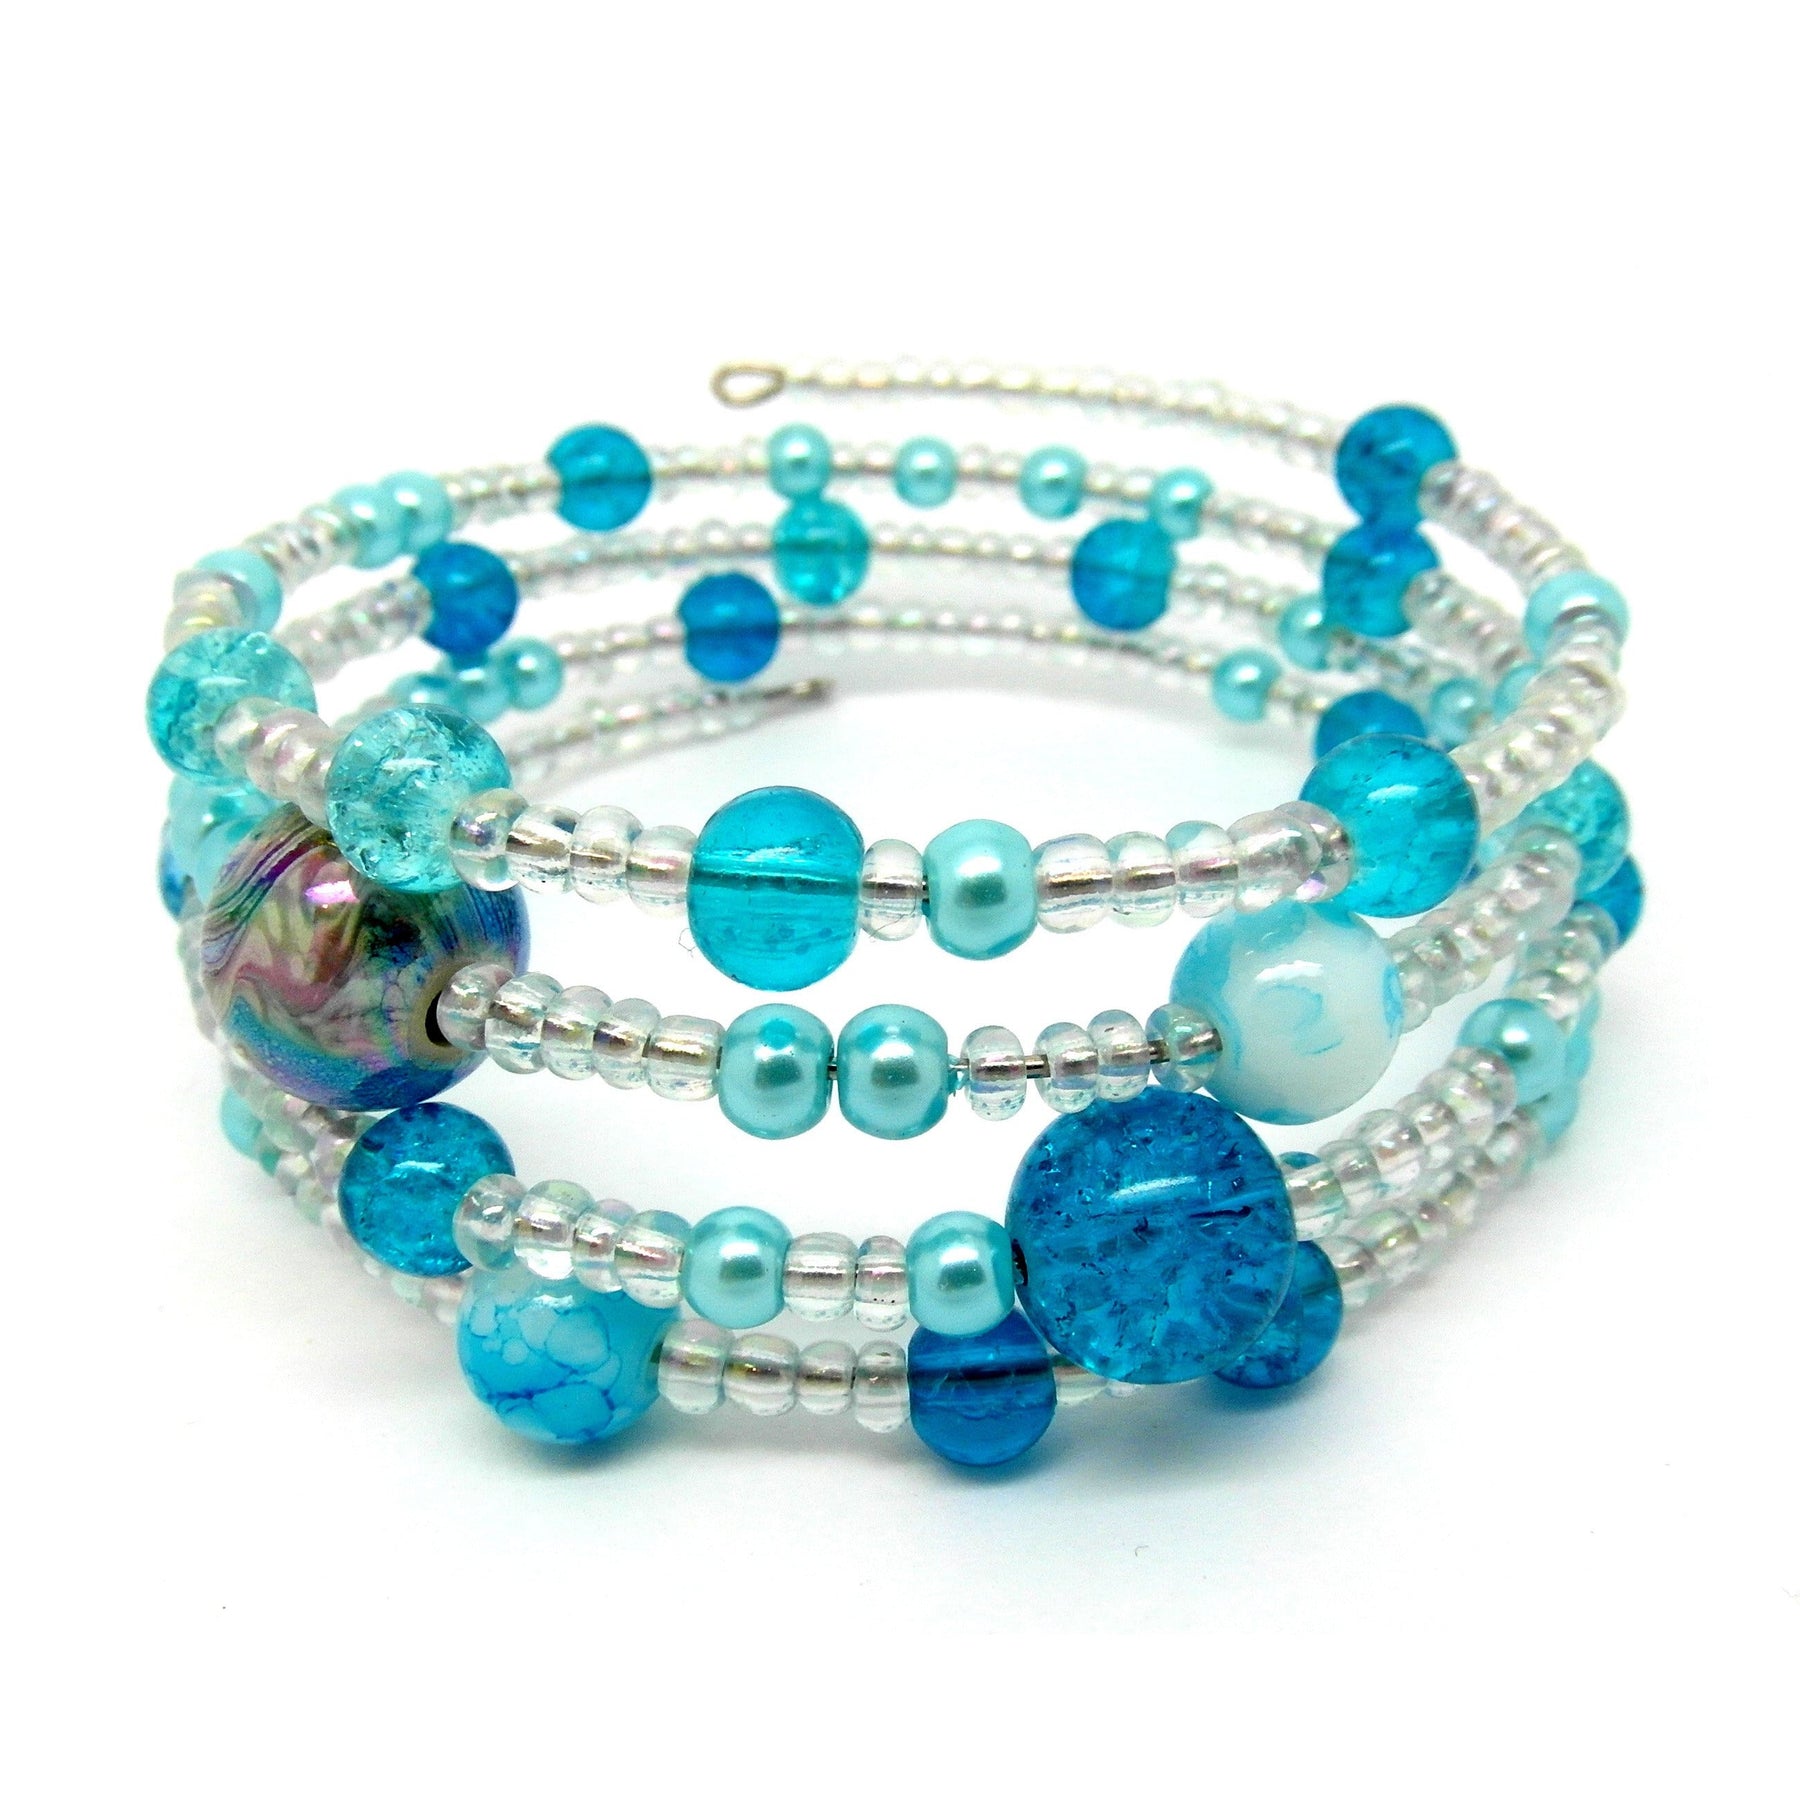 Number Beads  Julz Beads – UK Jewellery Making Supplies